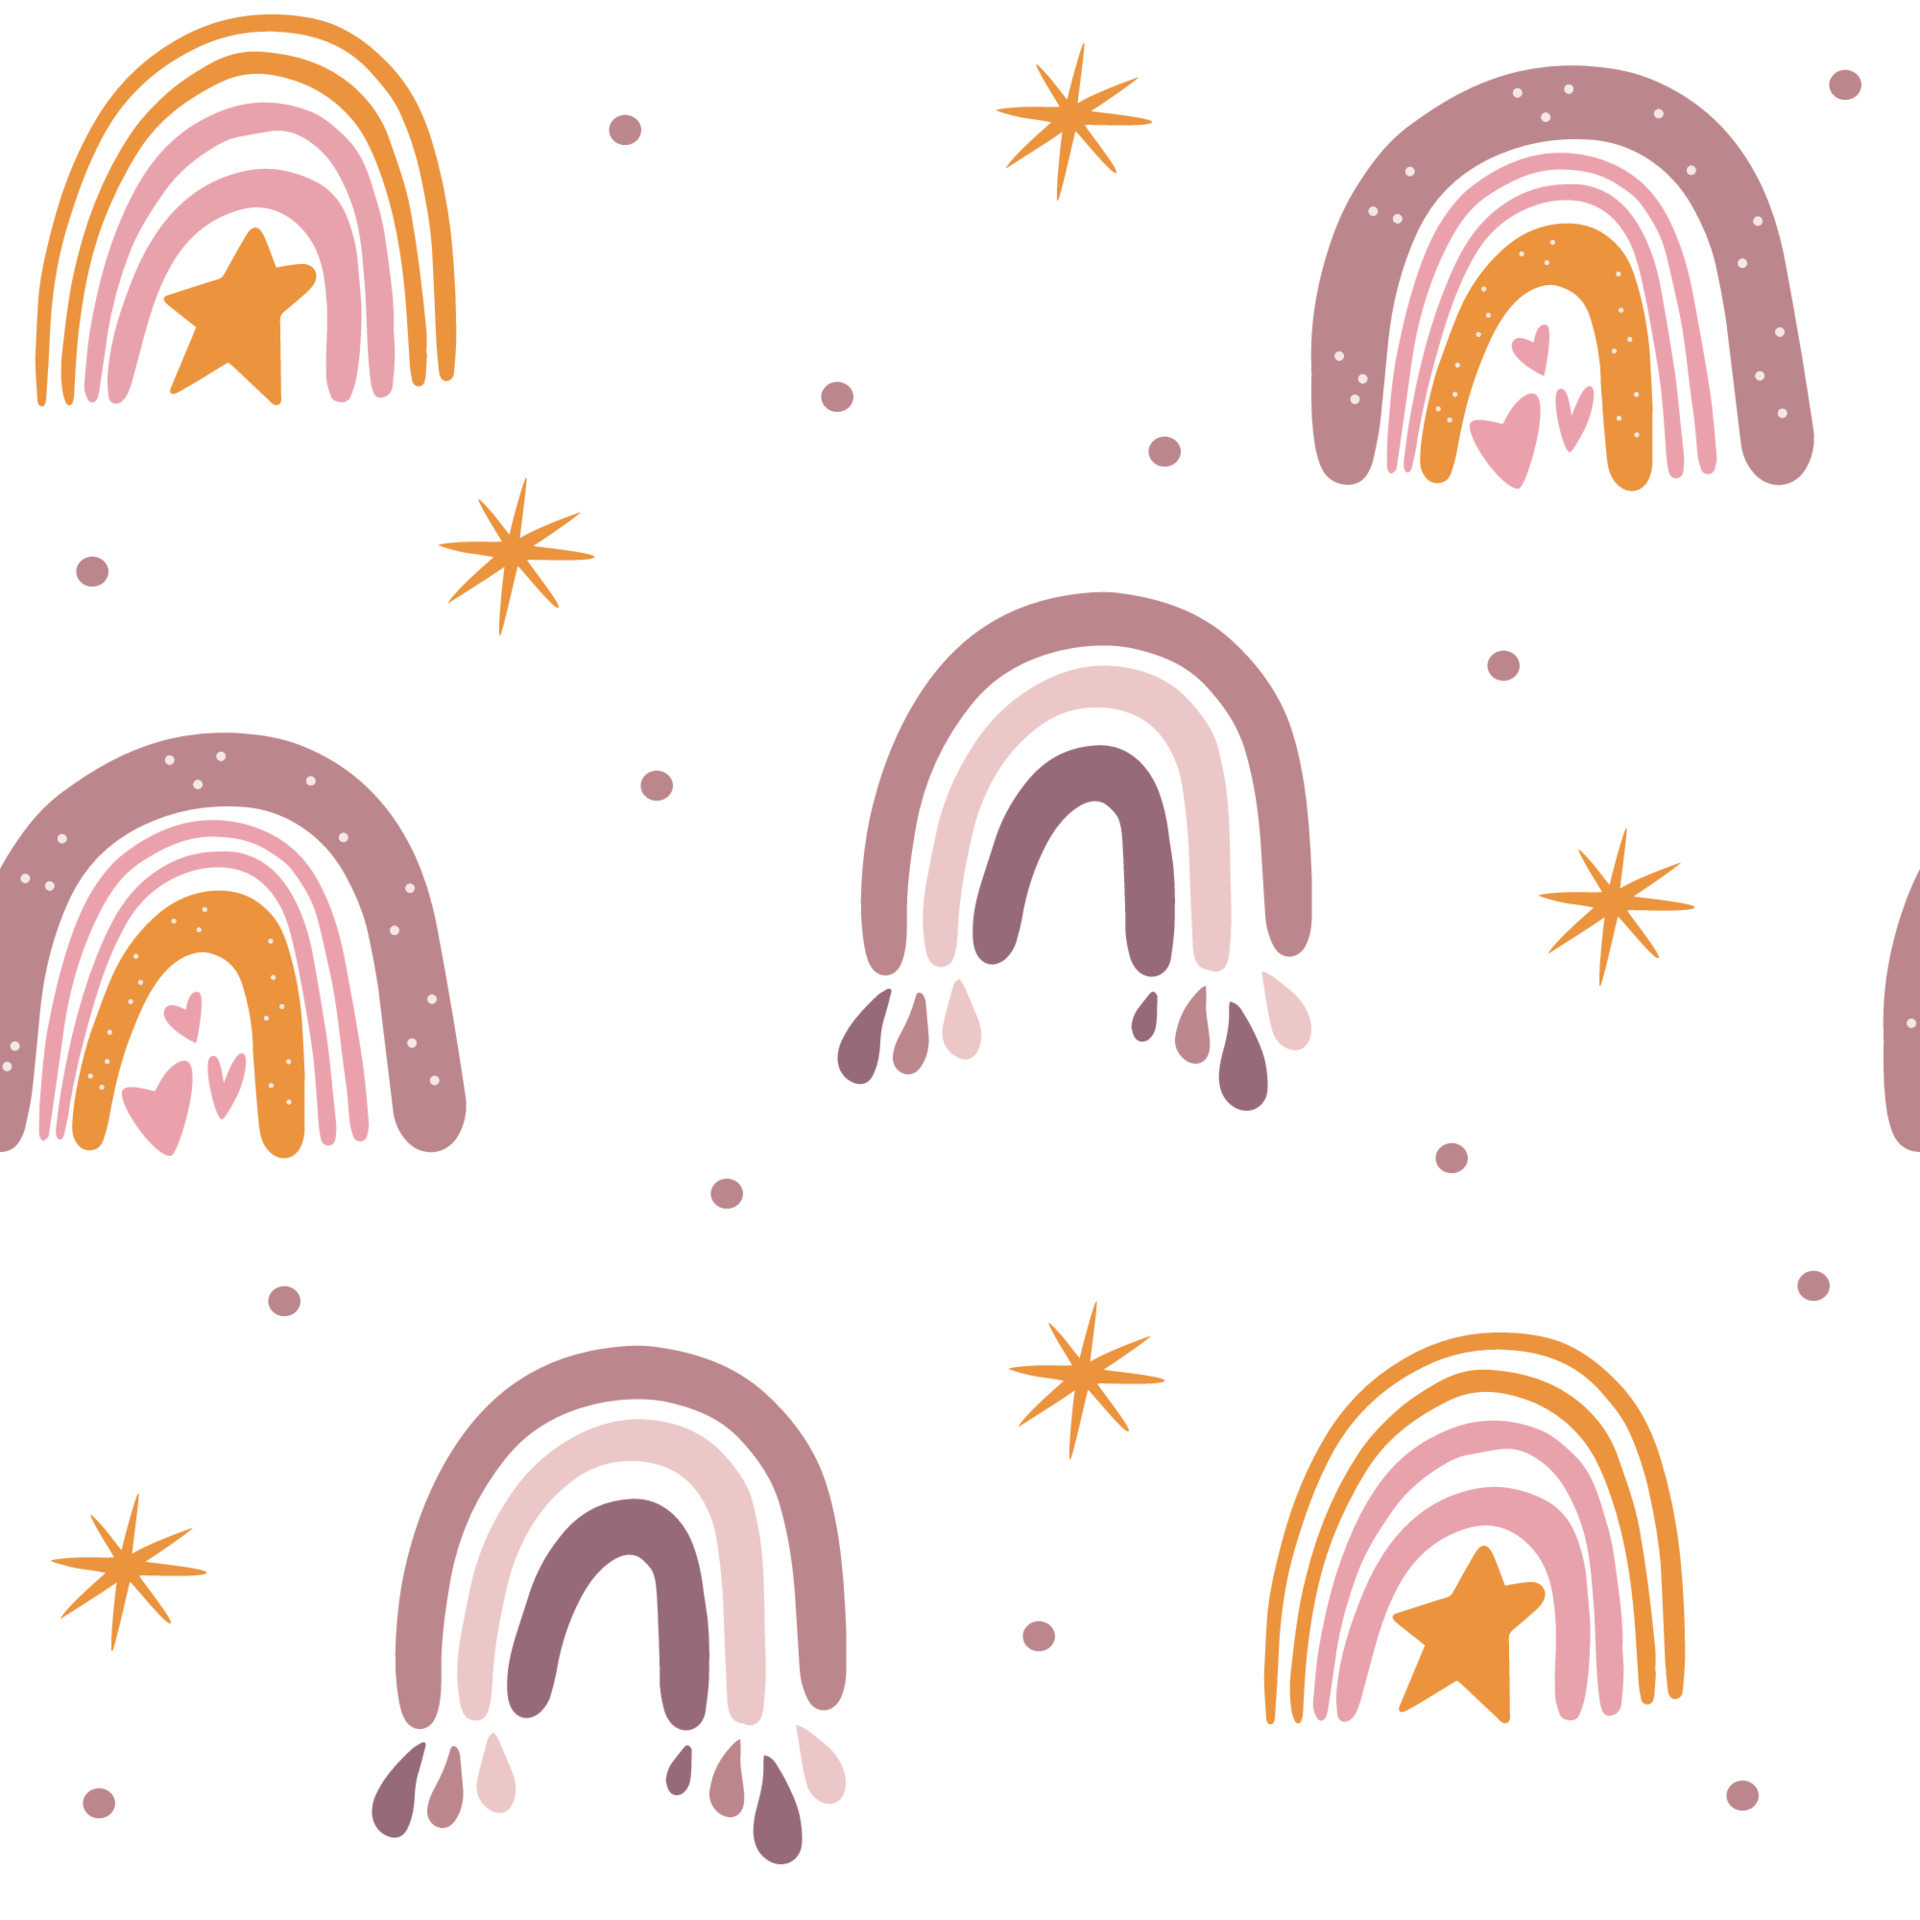 1920x1920 Rainbow seamless pattern. Hand draw boho rainbows, stars and hearts. Creative Scandinavian children's texture for fabric, wraps, textiles, wallpaper, clothing. Vector illustration. 4302655 Vector Art